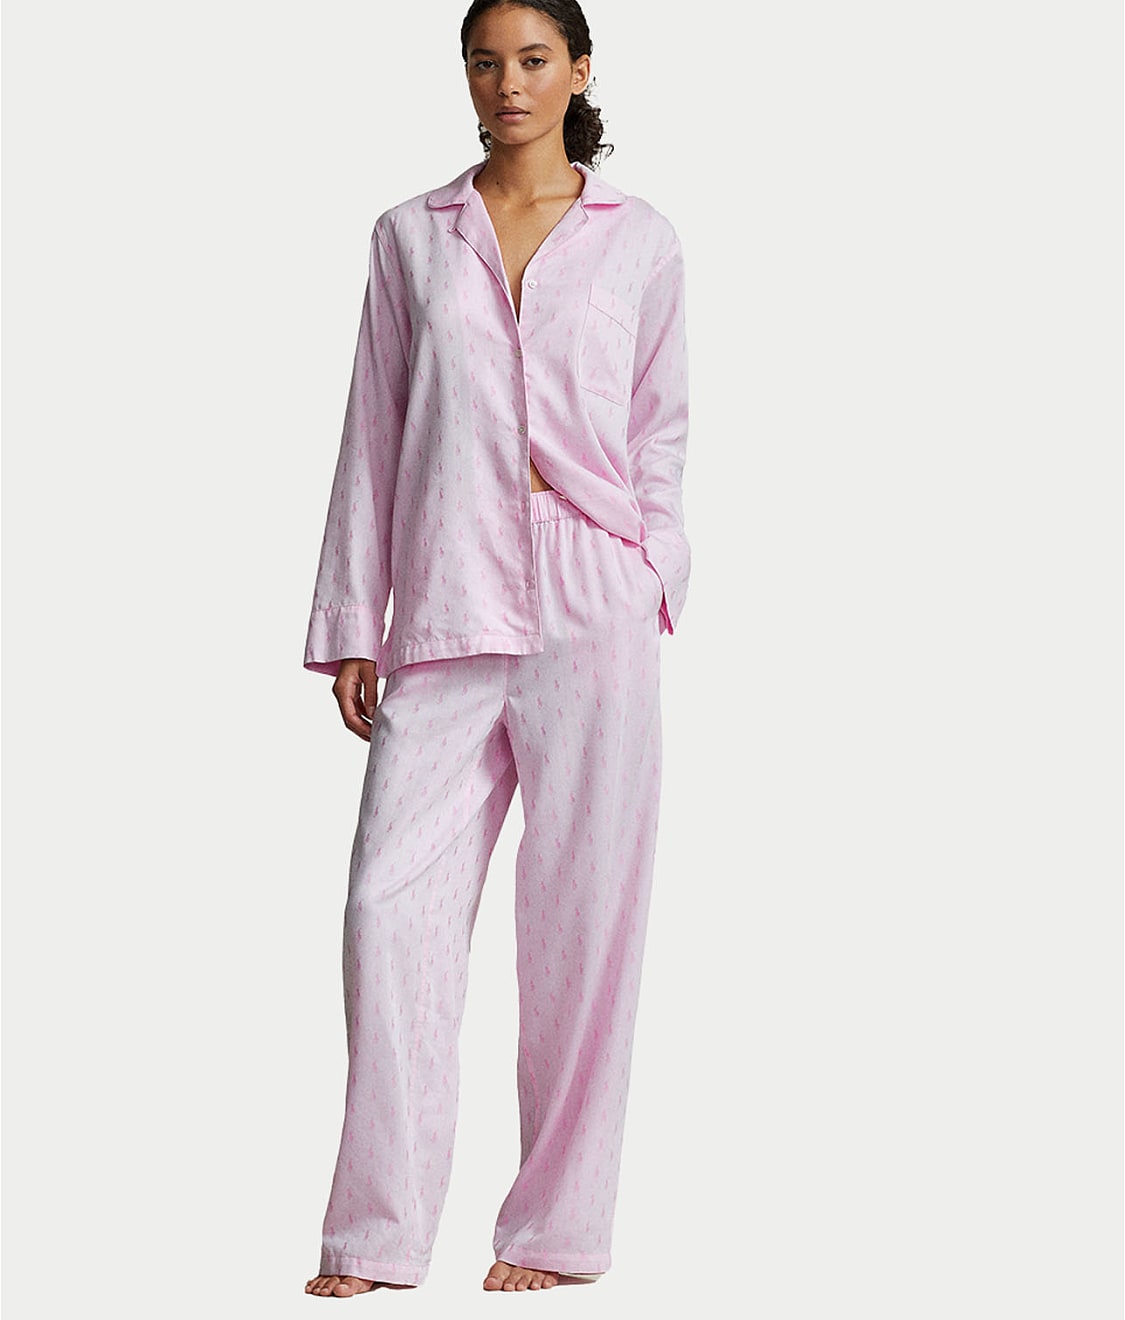 Polo Ralph Lauren The Madison Woven Pajama Set & Reviews | Bare ...